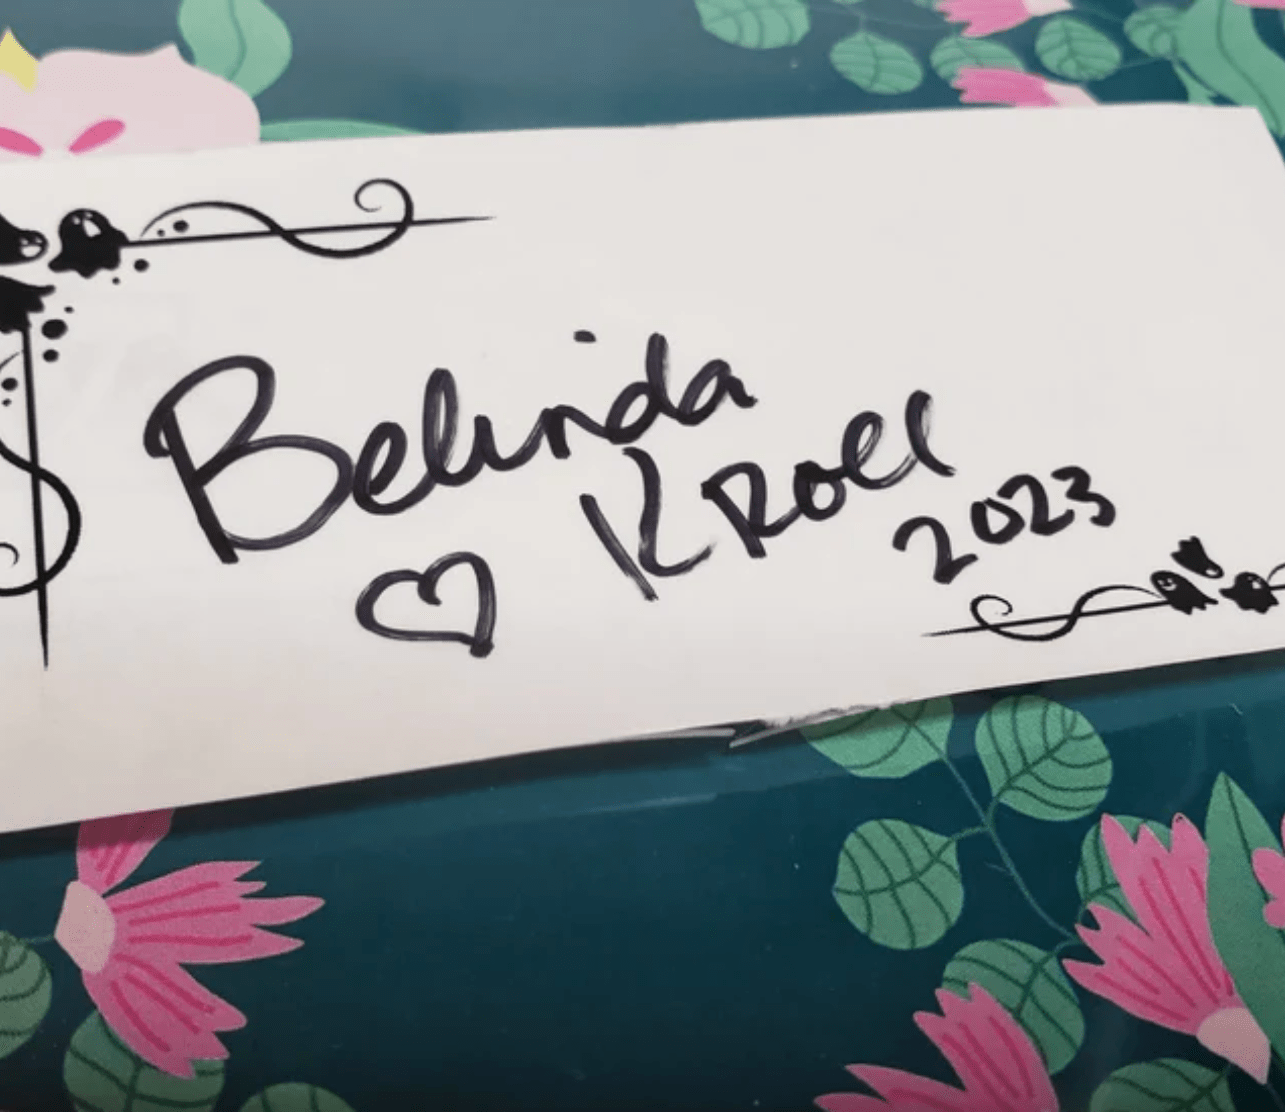 Book plate (author signature sticker) - Belinda Kroll